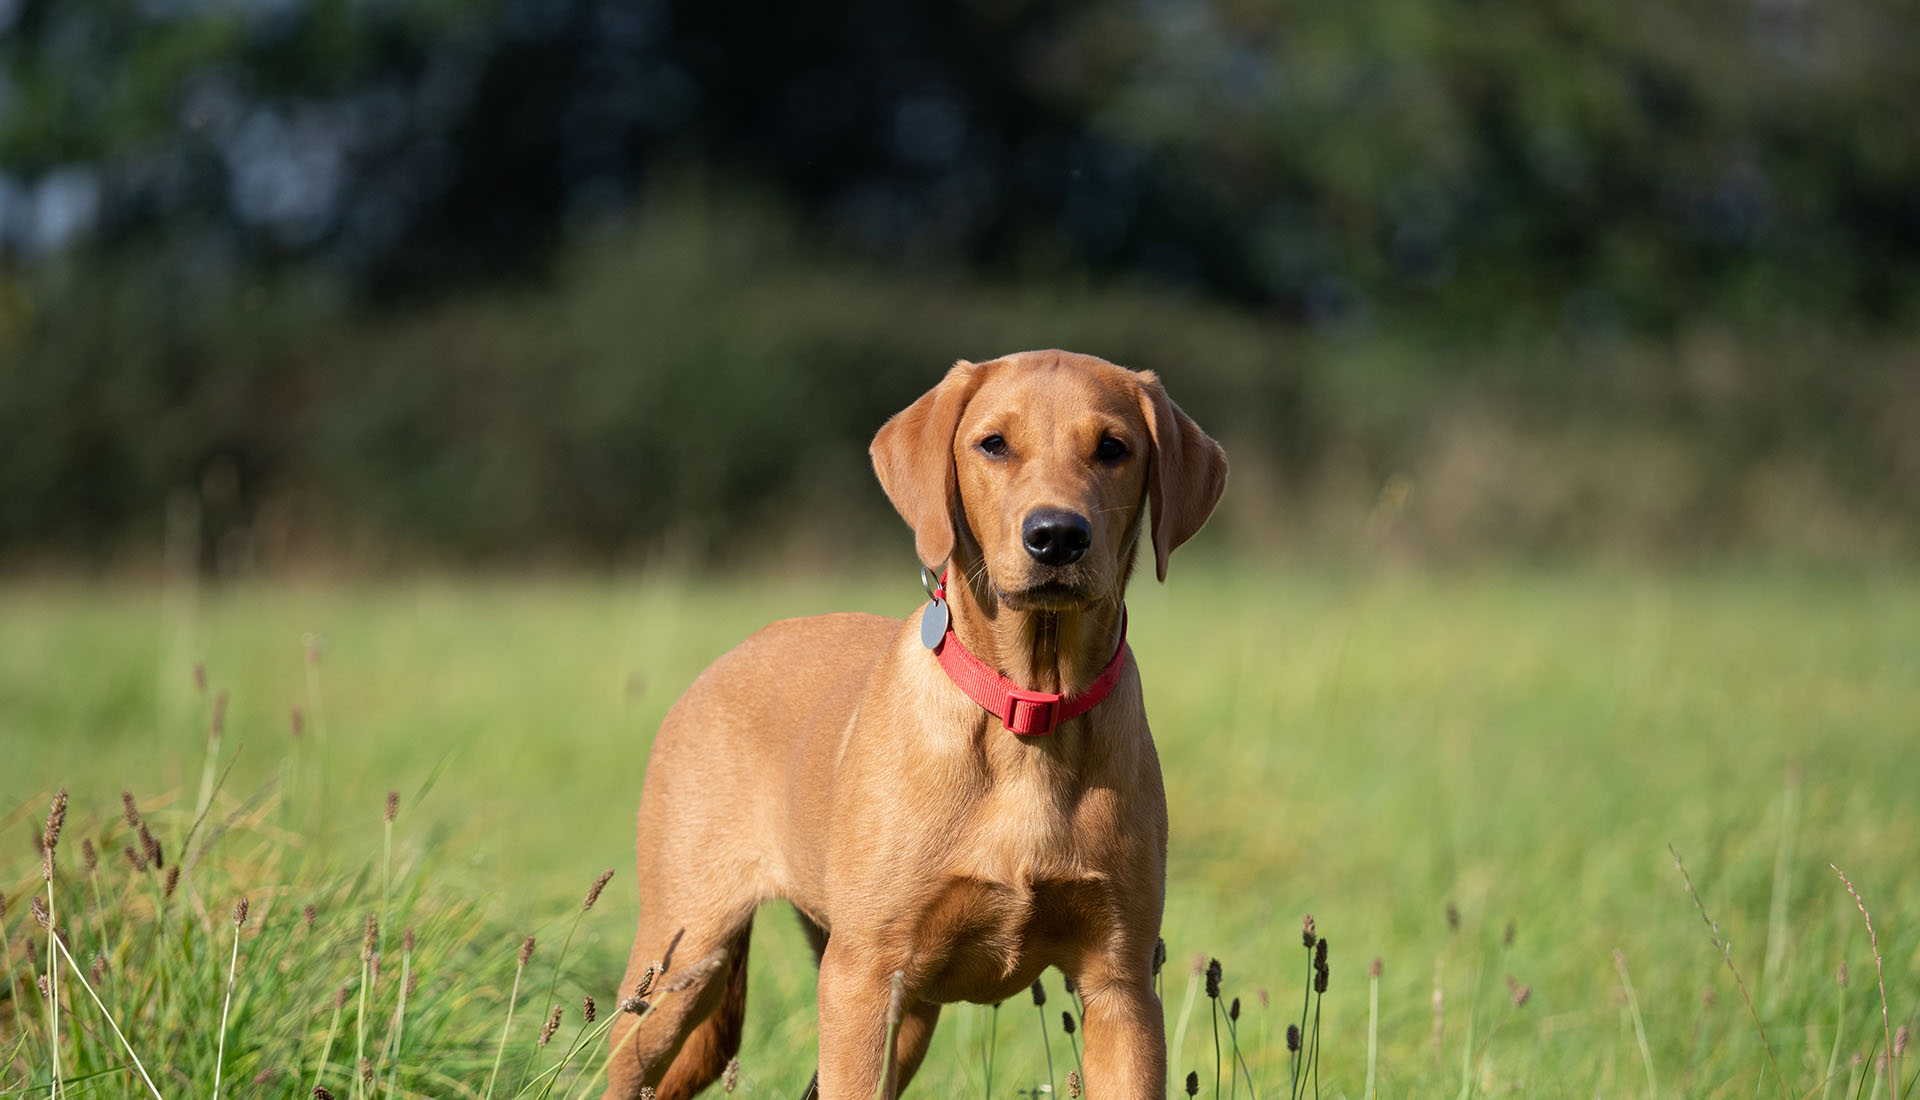 A red labrador retriever stands alert in a patch of grass